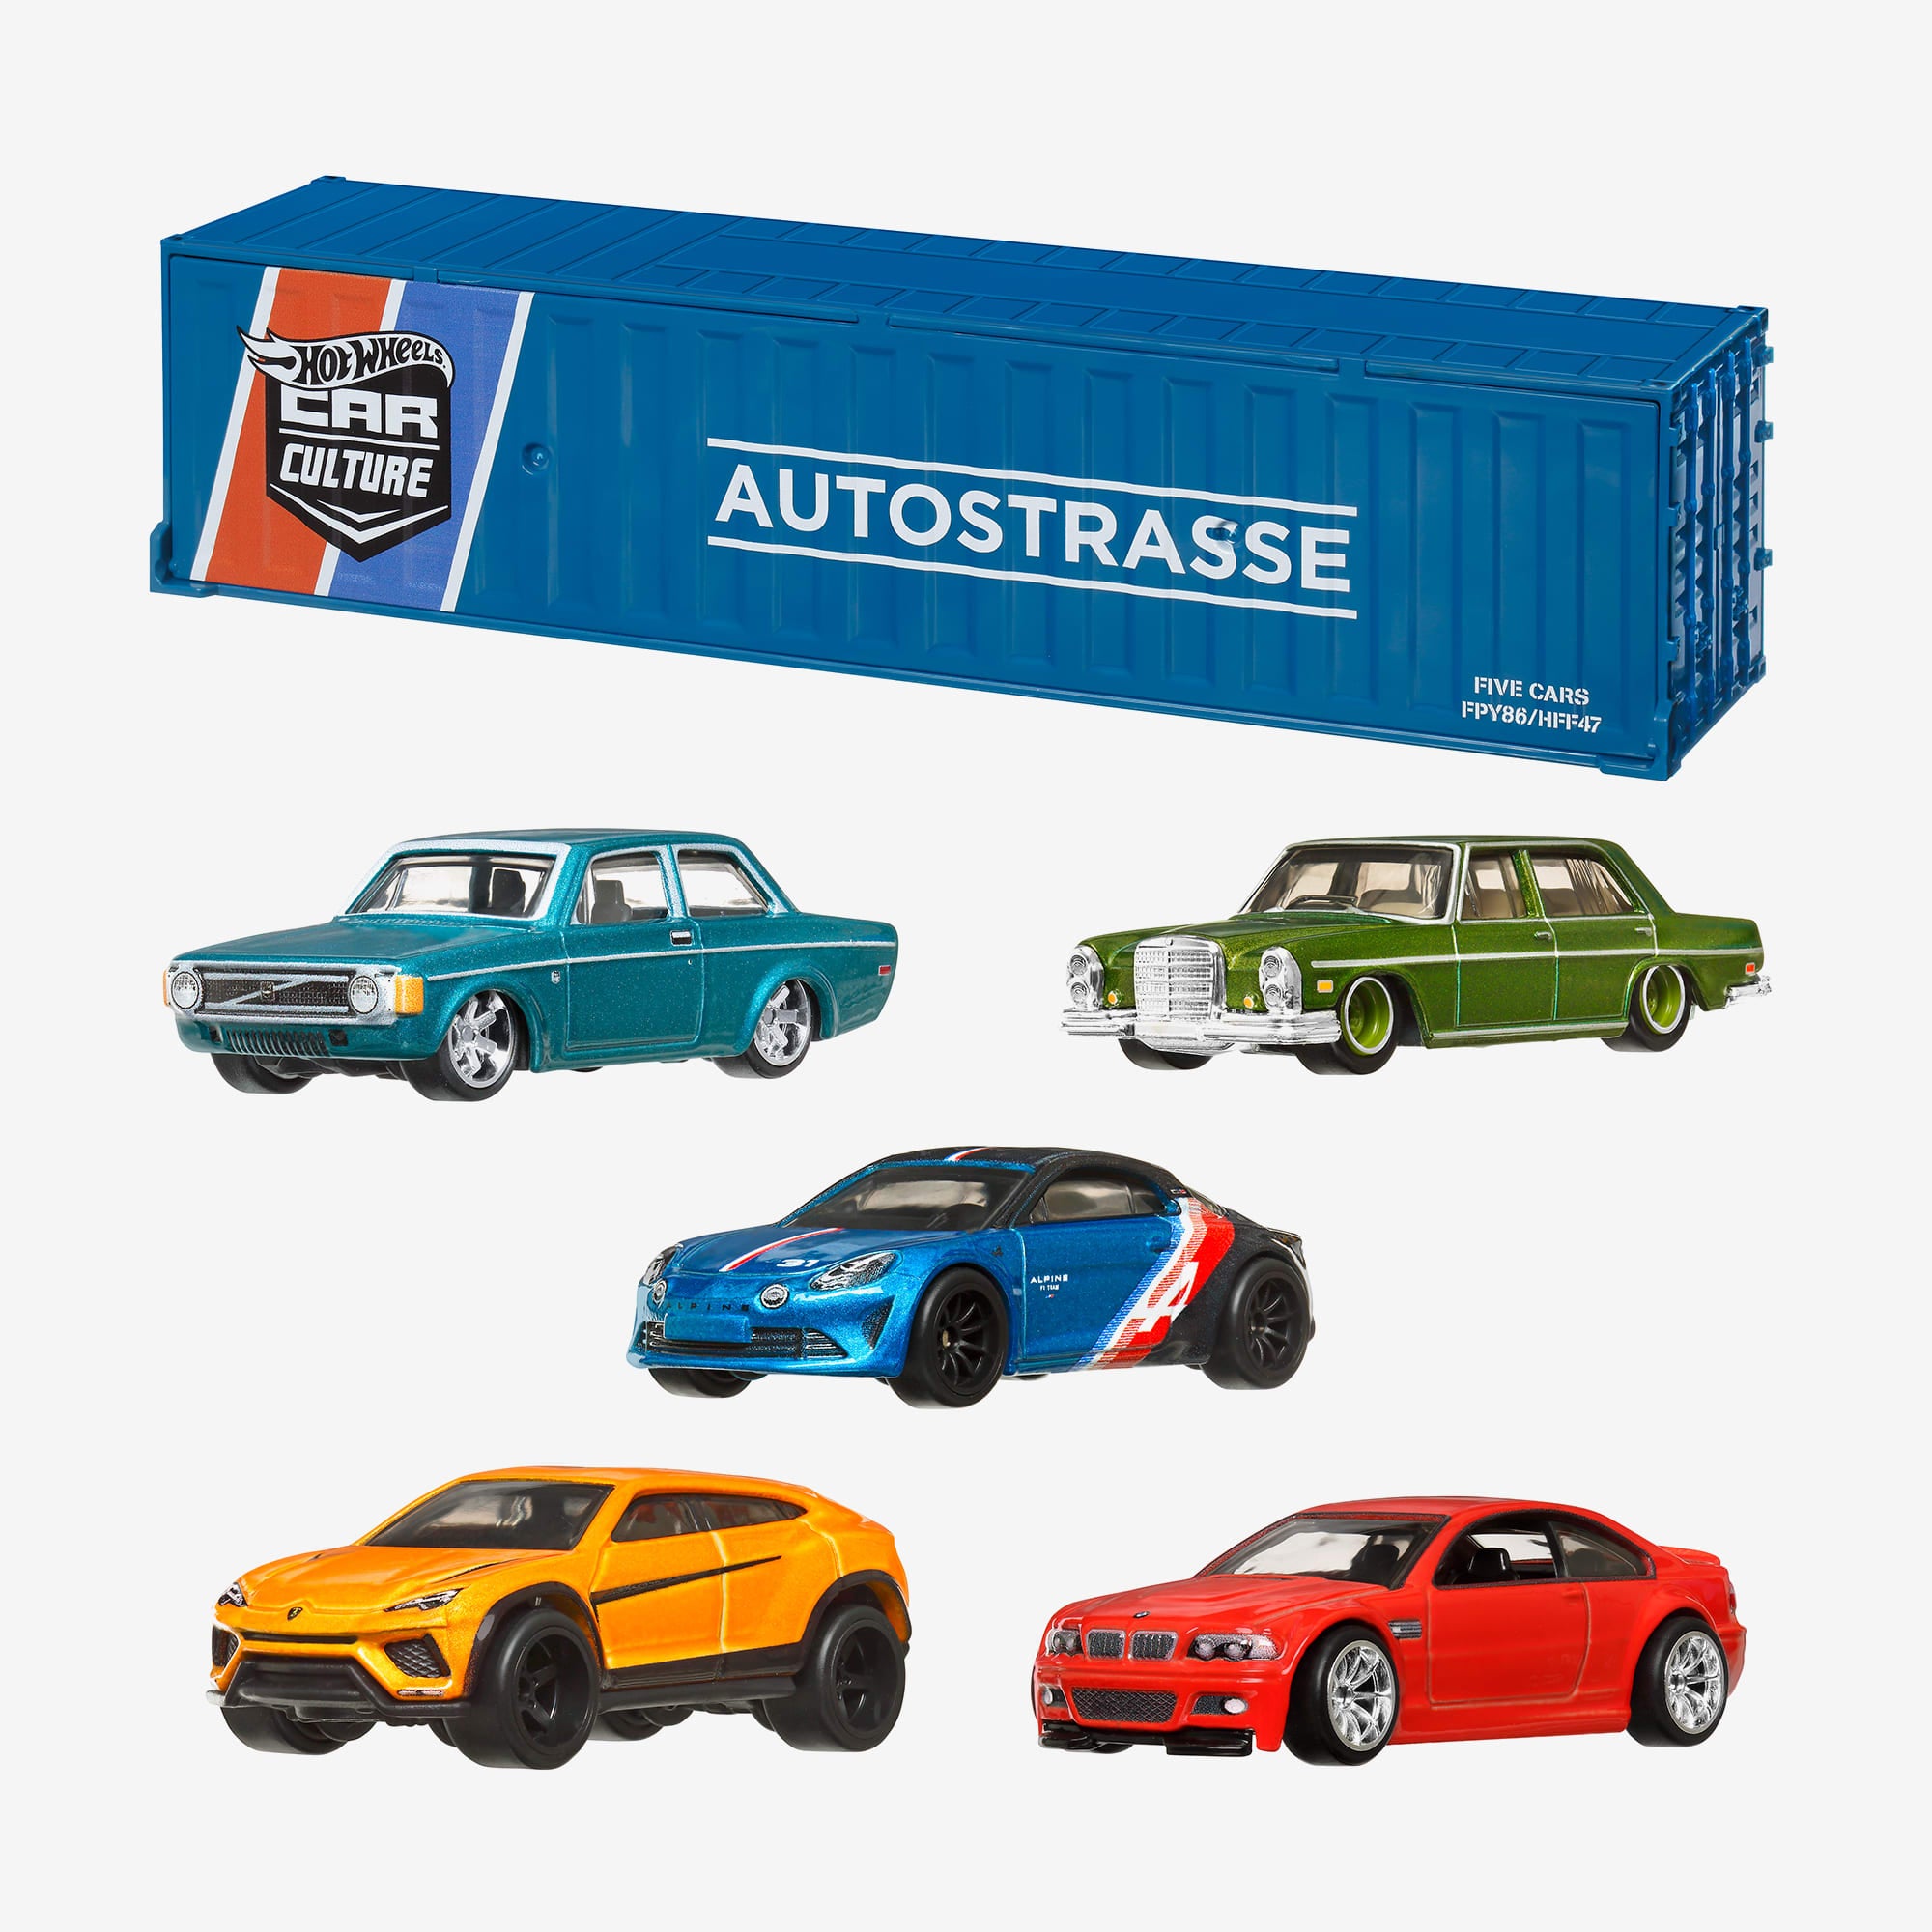 Retro Gran Turismo sep 2016  Hot wheels cars toys, Hot wheels, Hot wheels  cars